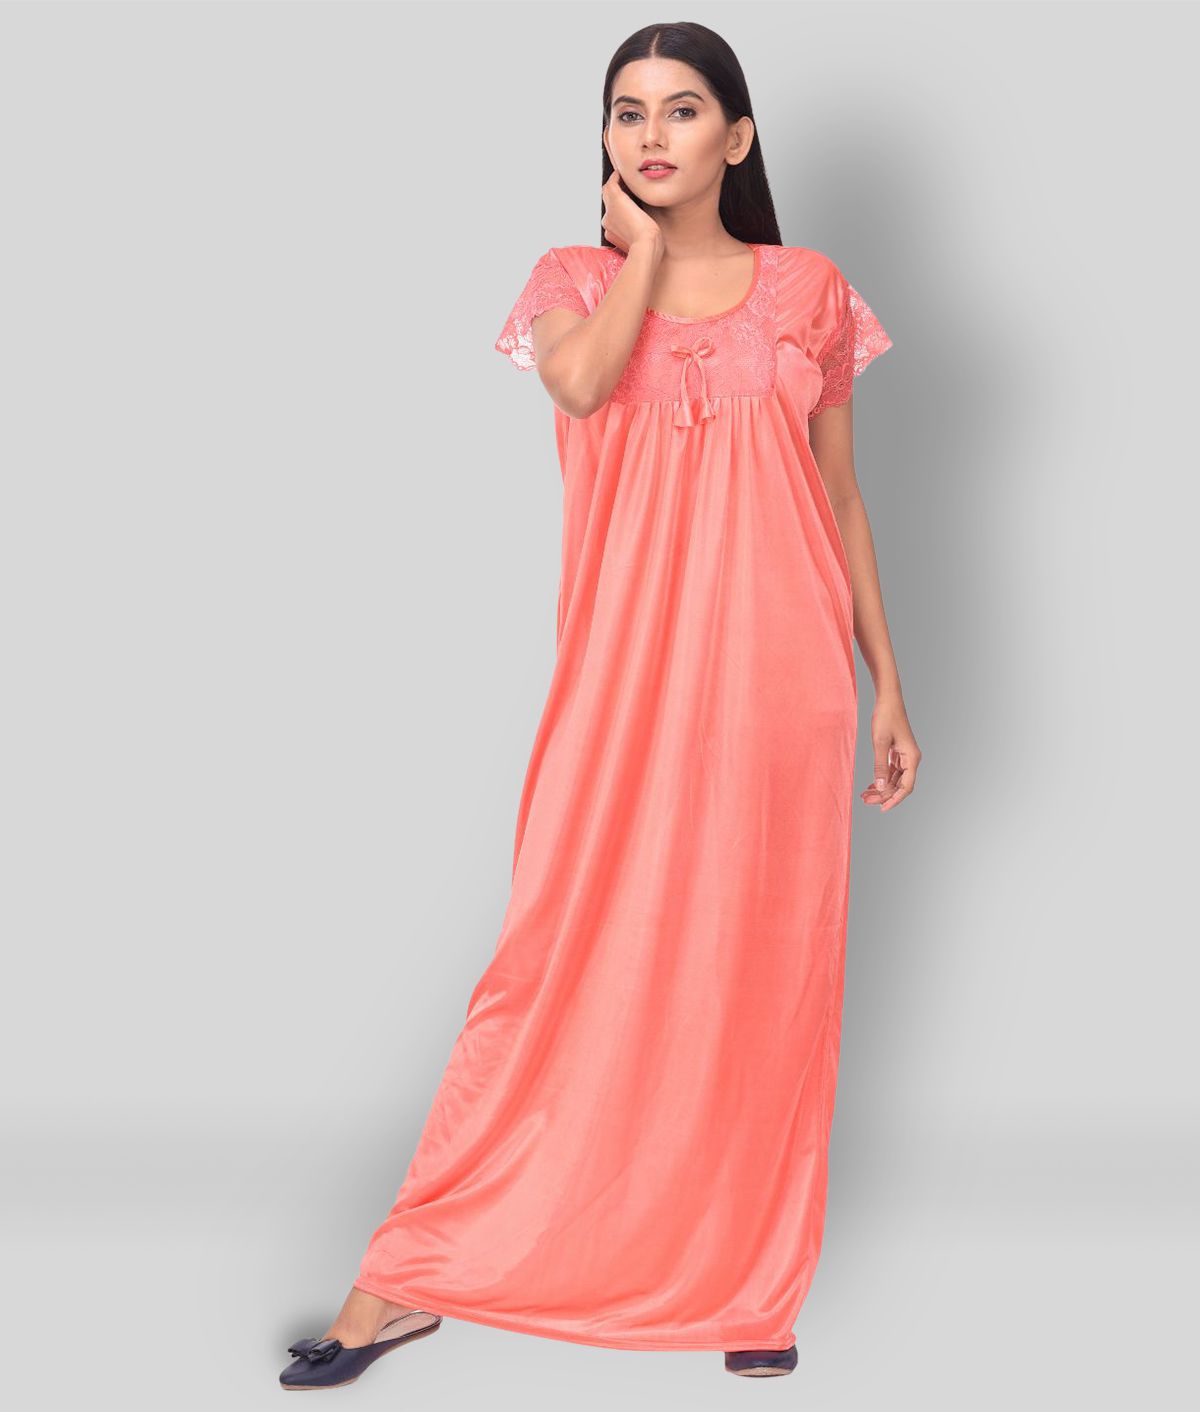 Apratim - Peach Satin Women's Nightwear Nighty & Night Gowns